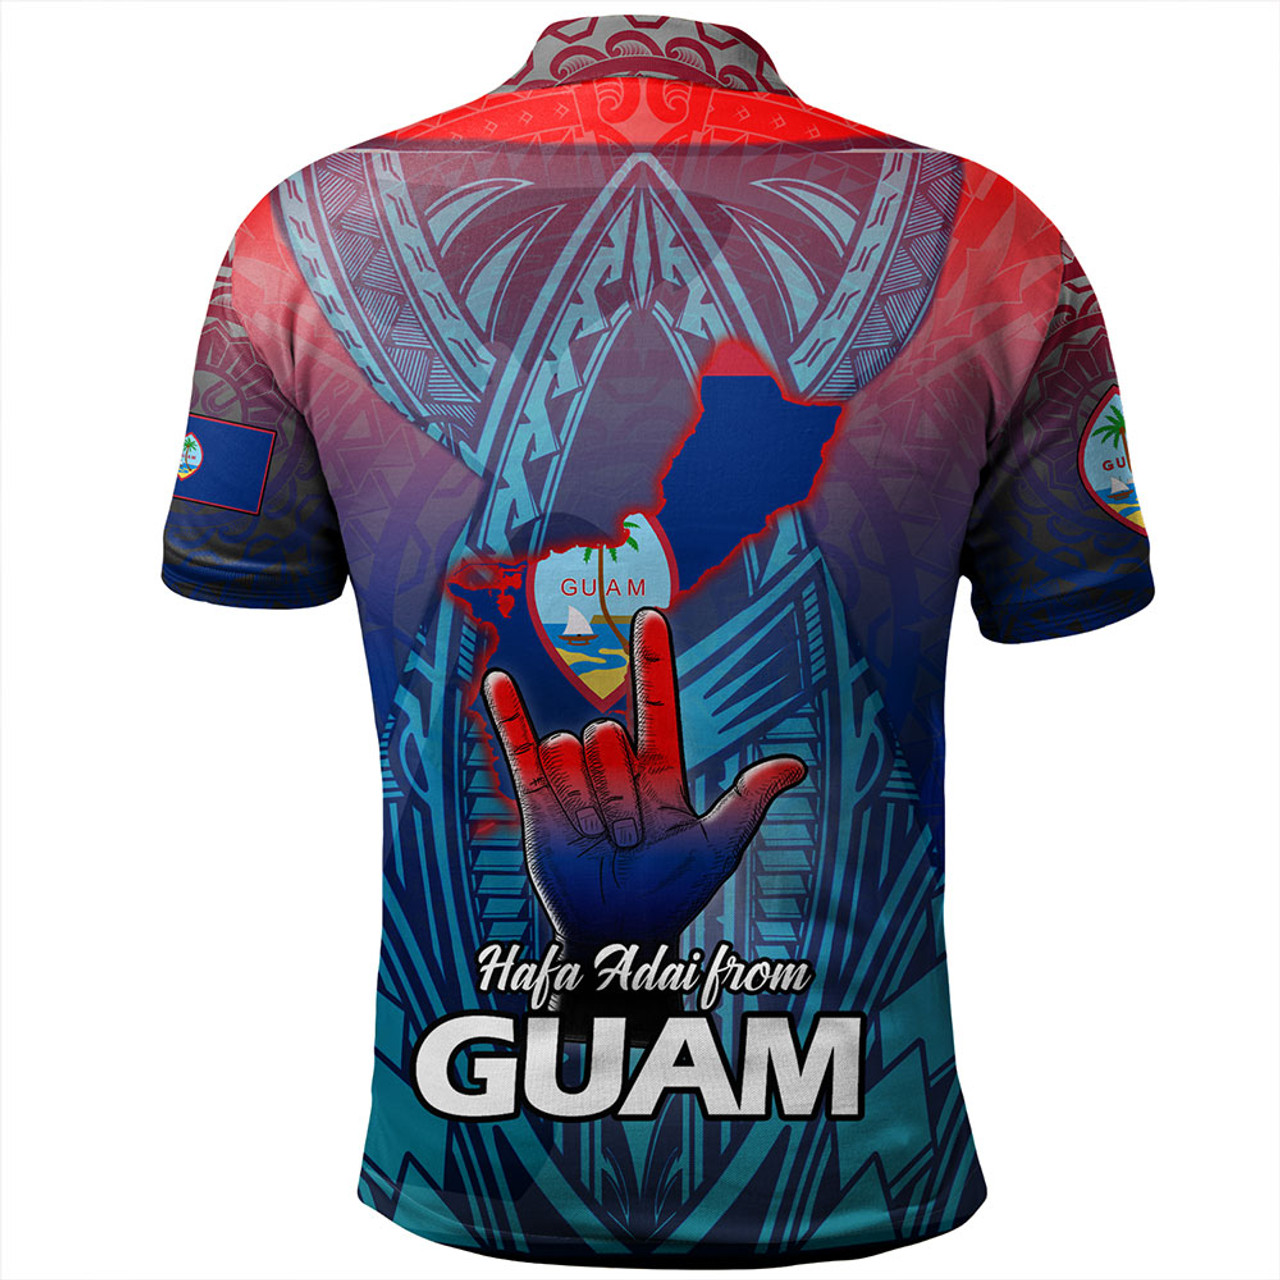 Guam Polo Shirt Hafa Adai From Guam Style